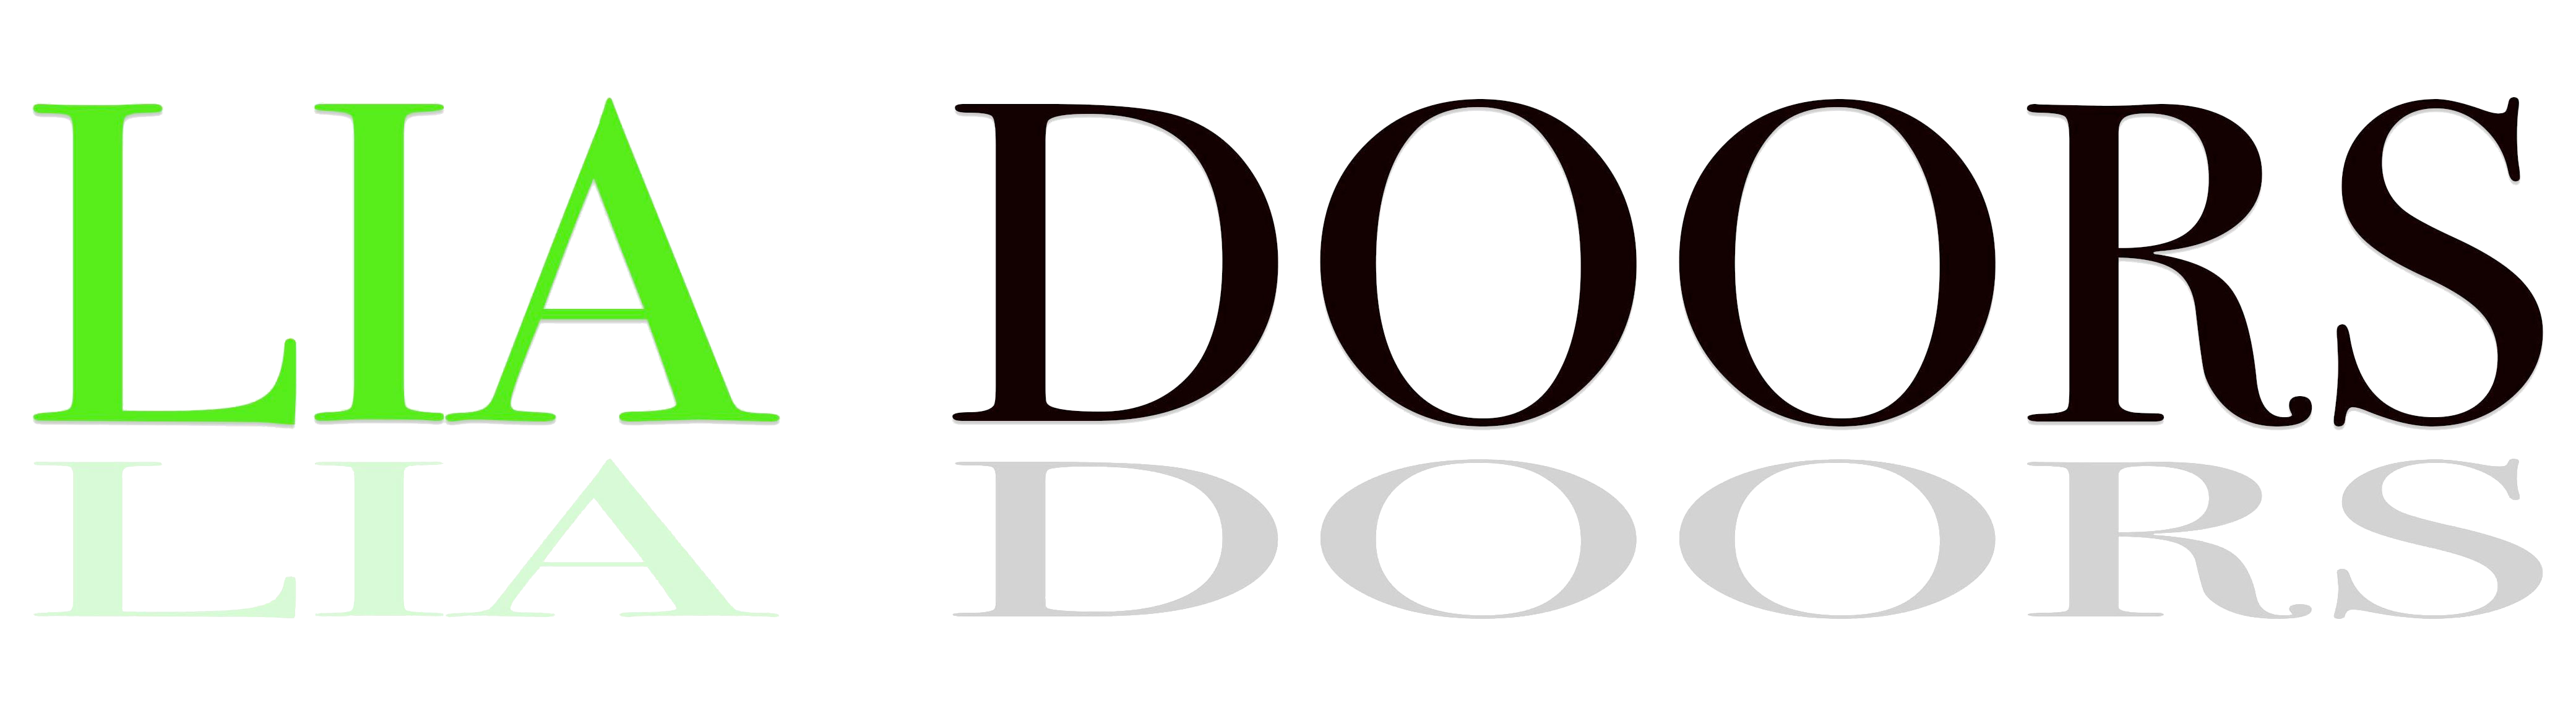 Logo de Lia Doors